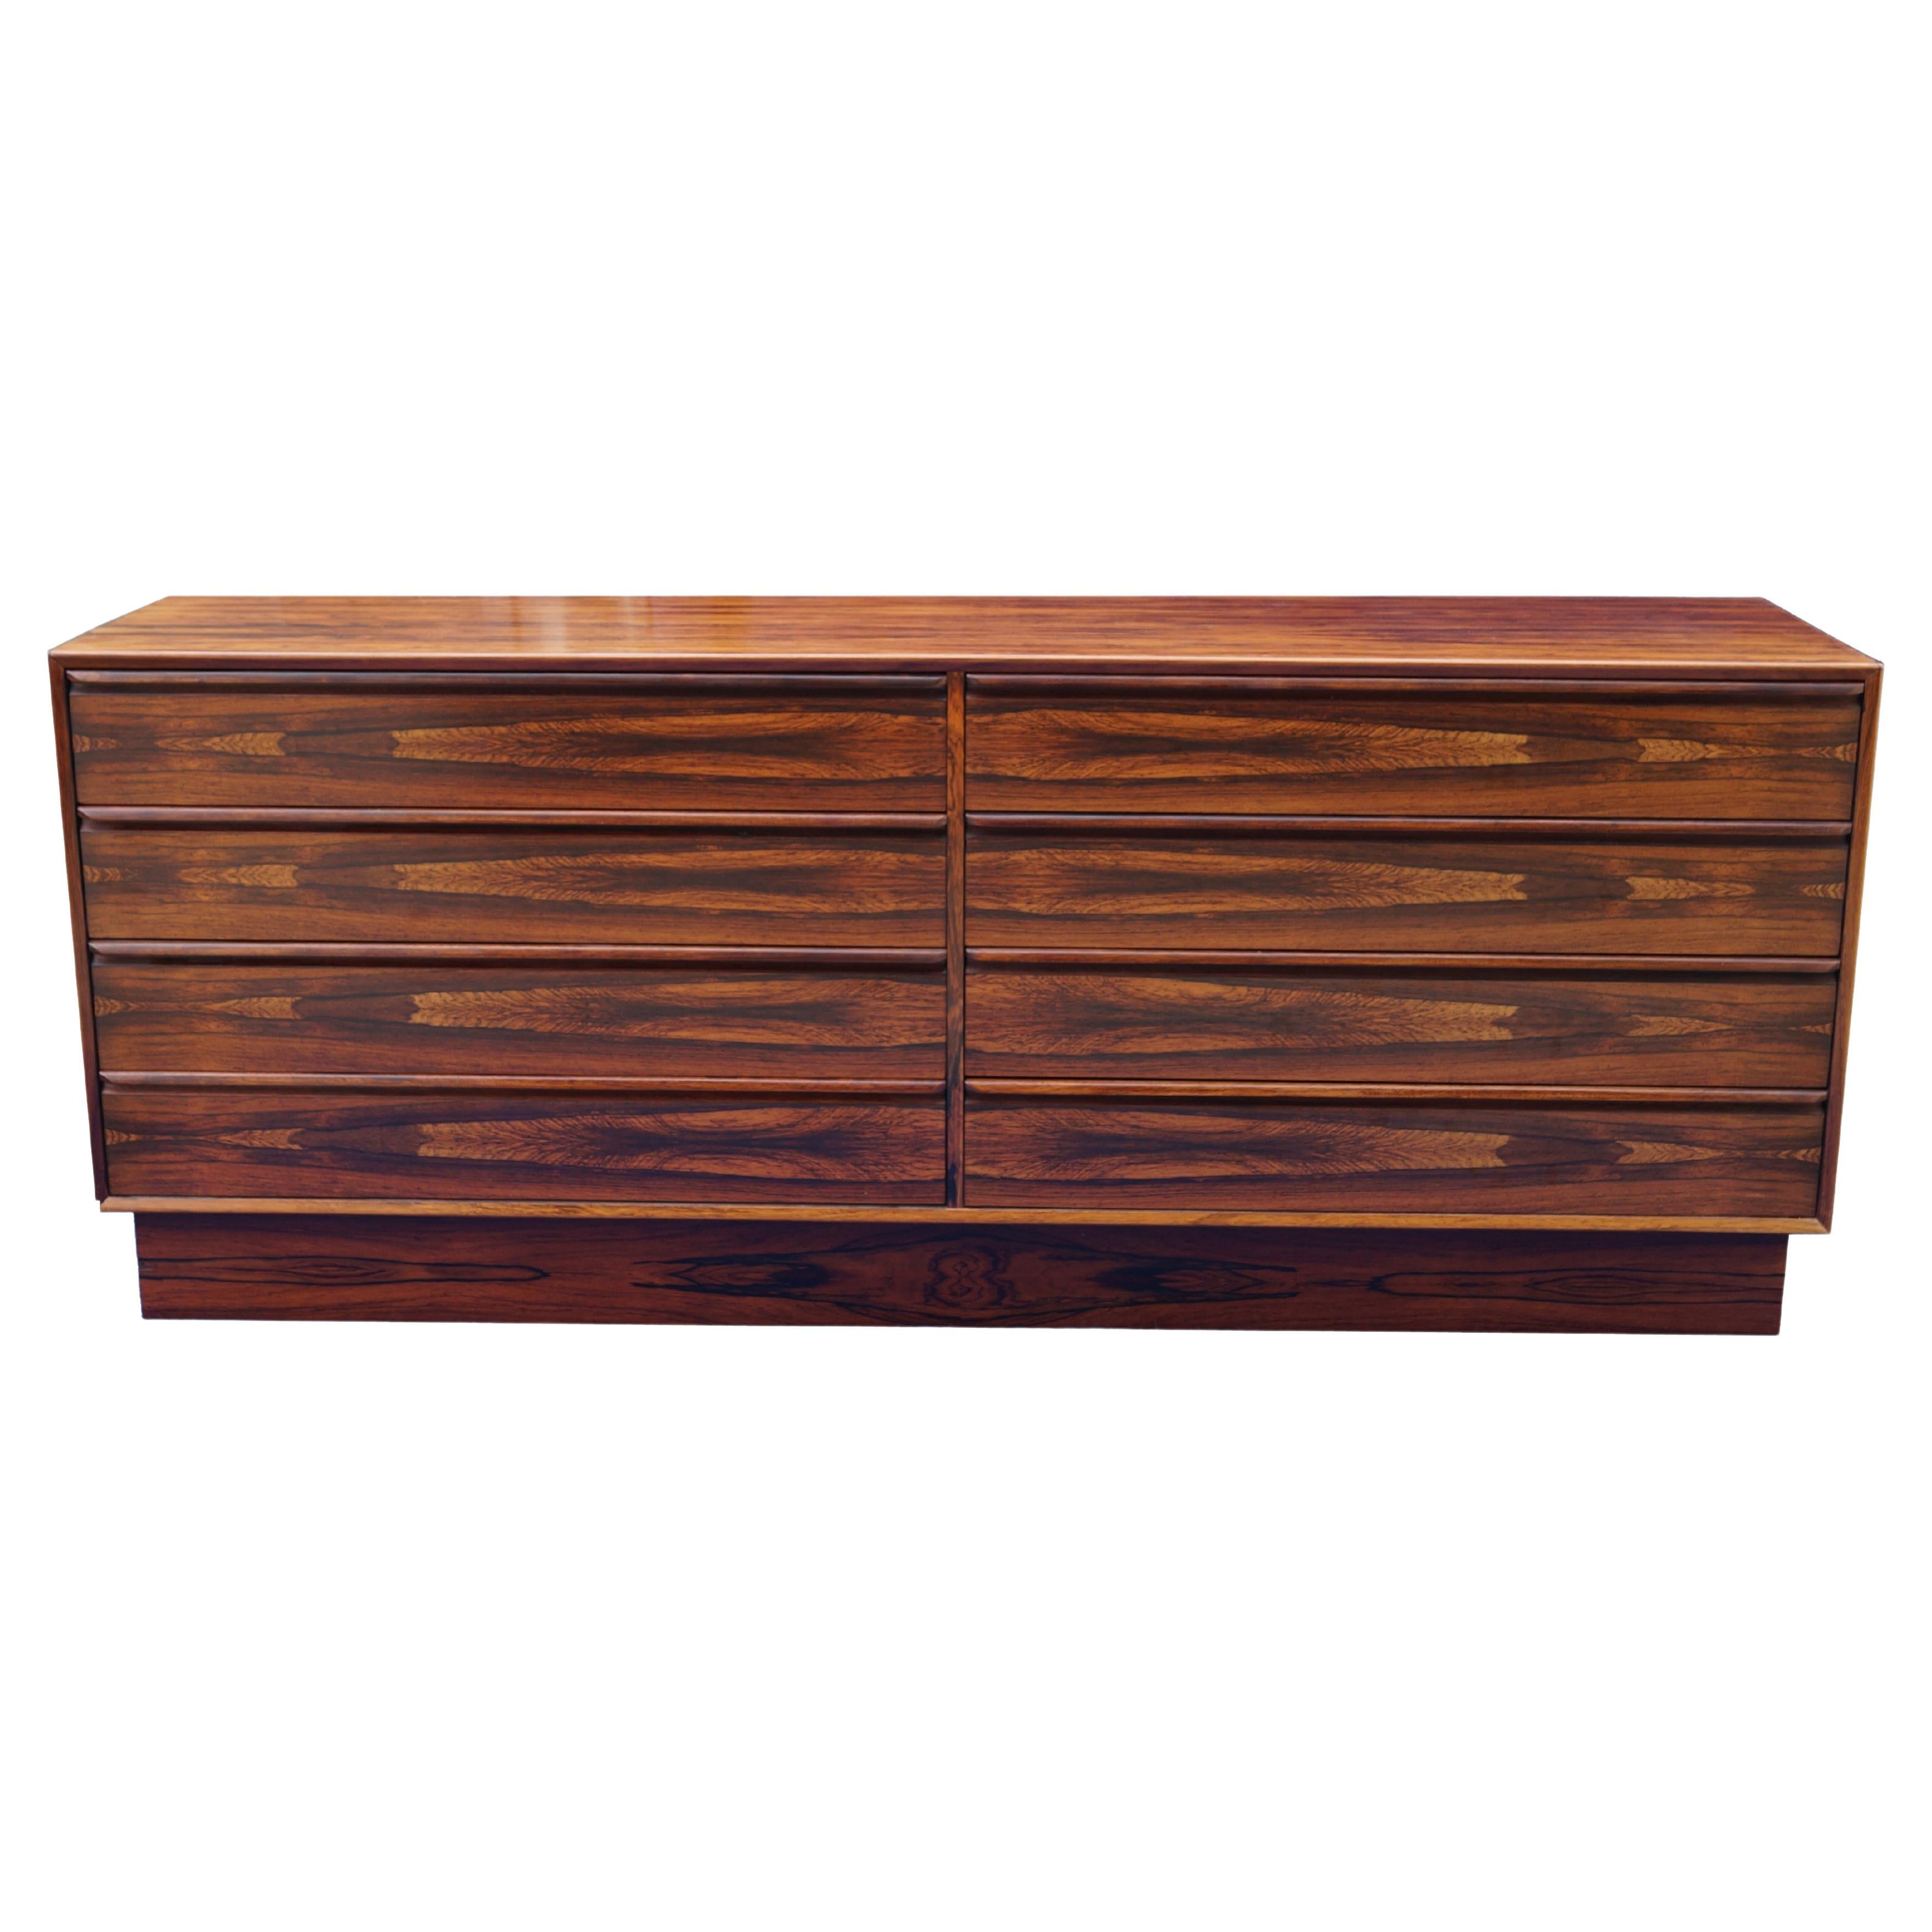  1960's Modern Rosewood Eight-Drawer Dresser Sideboard Chest Westnofa of Norway